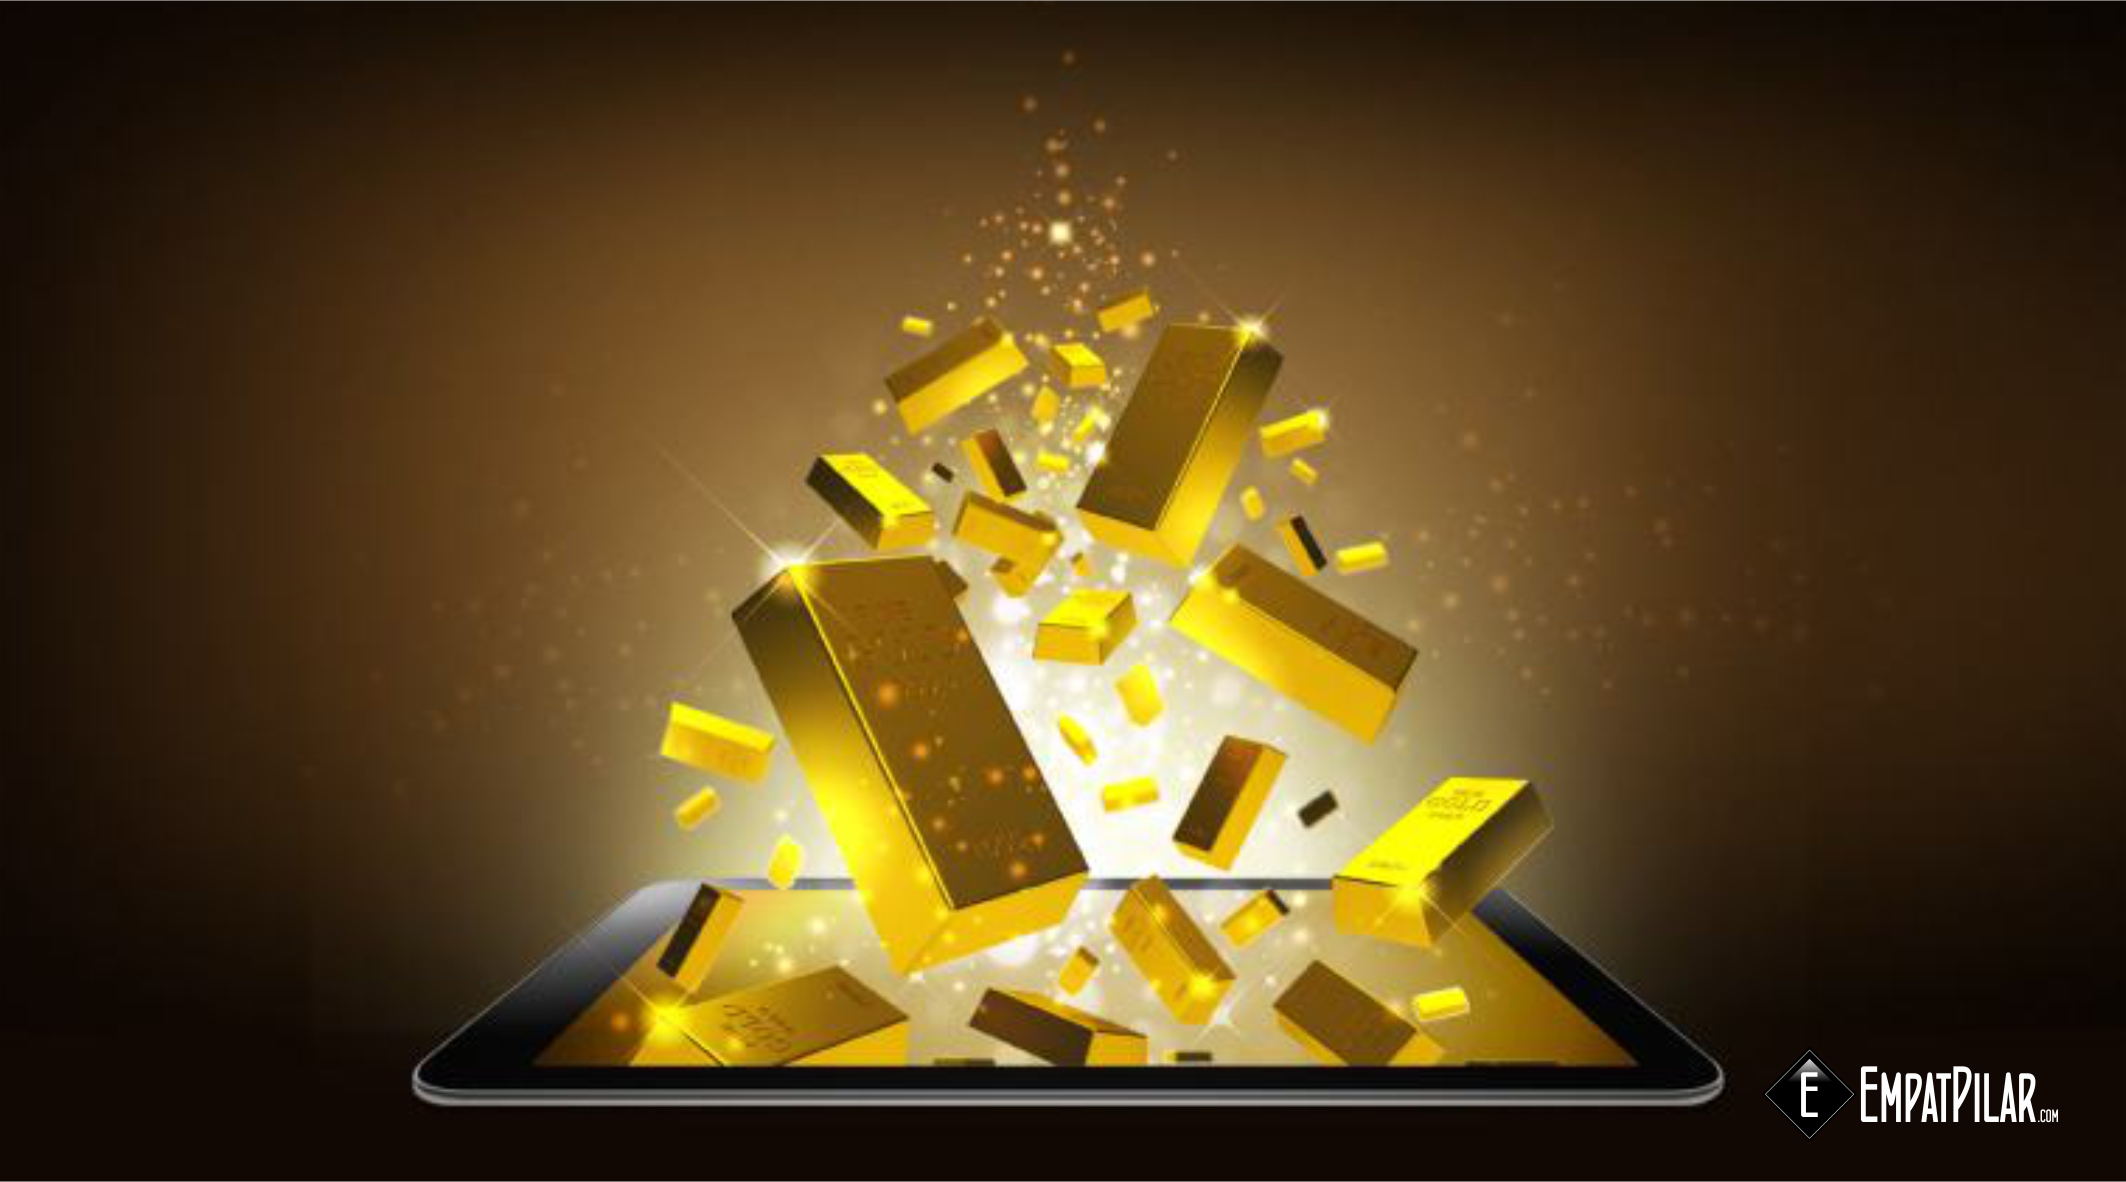 Aplikasi trading emas online